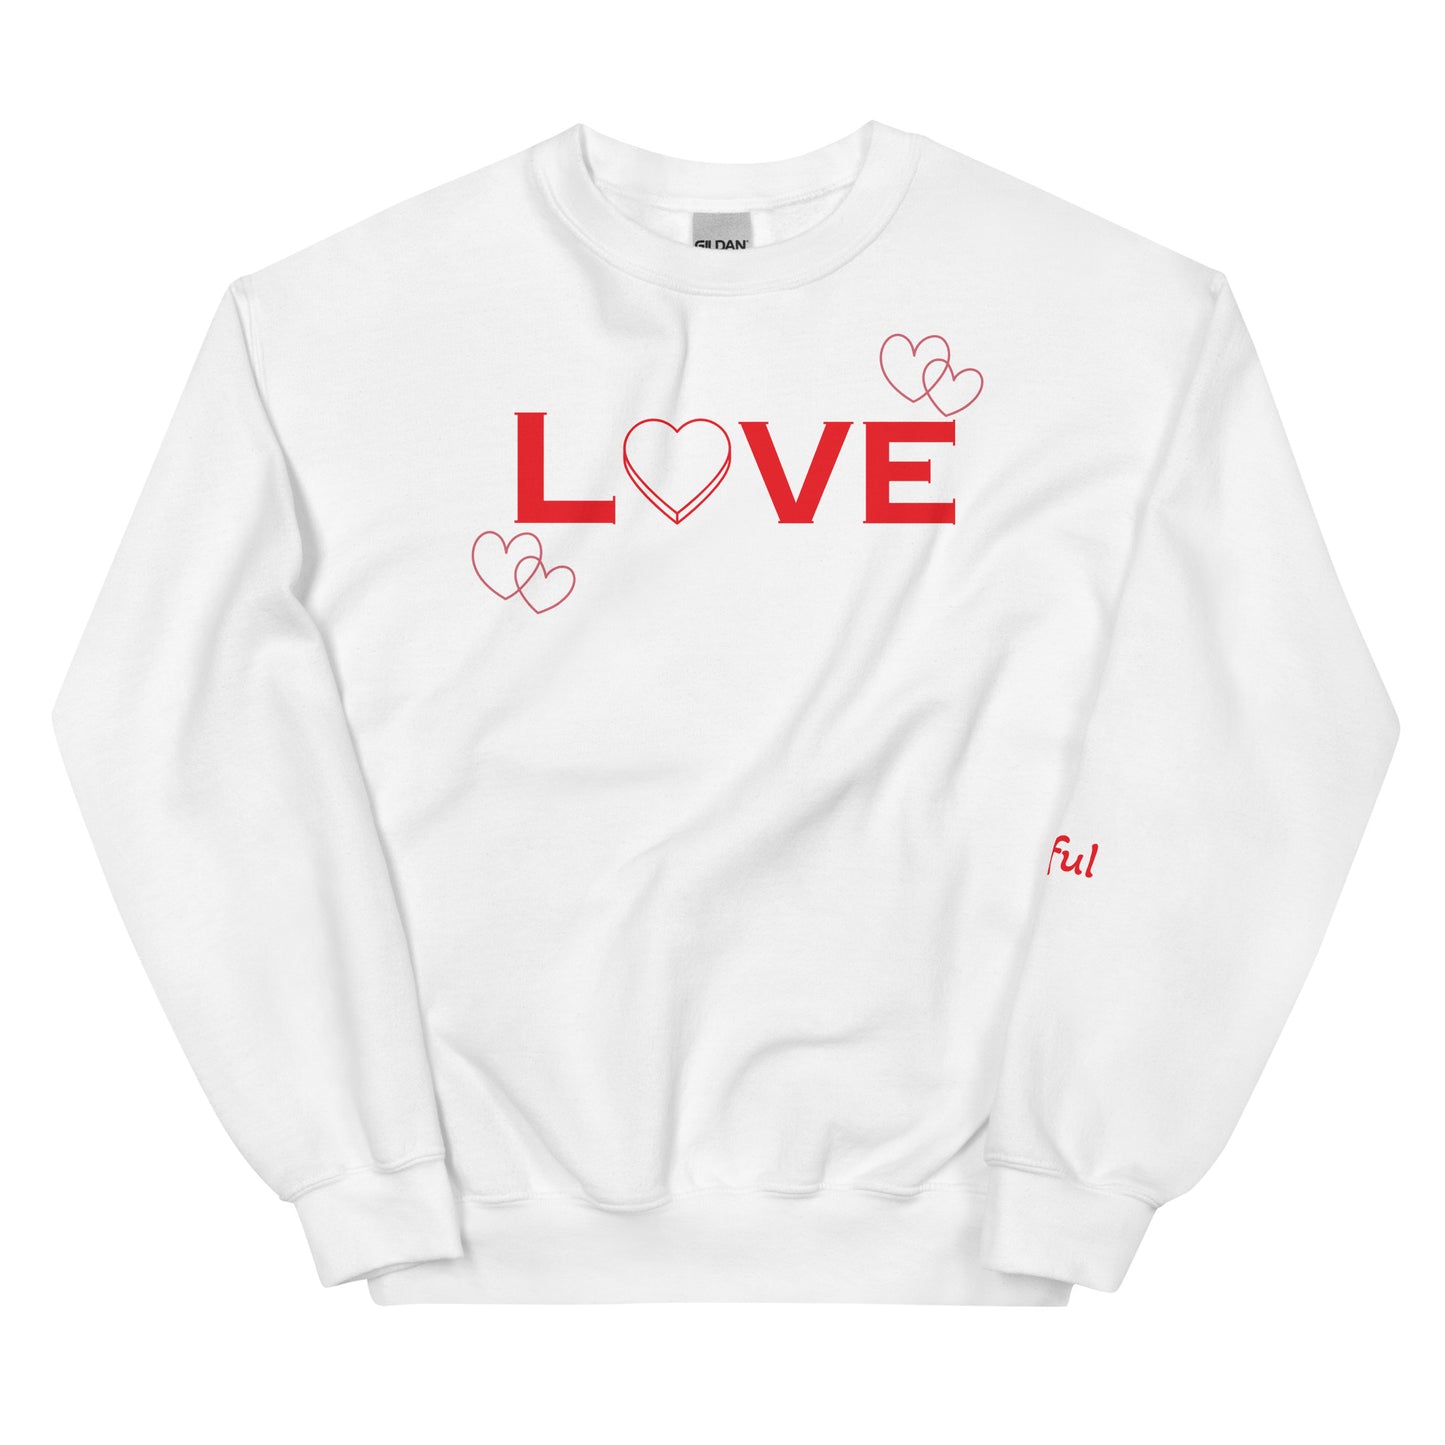 Unisex Peaceful Love Sweatshirt [Red lettering]